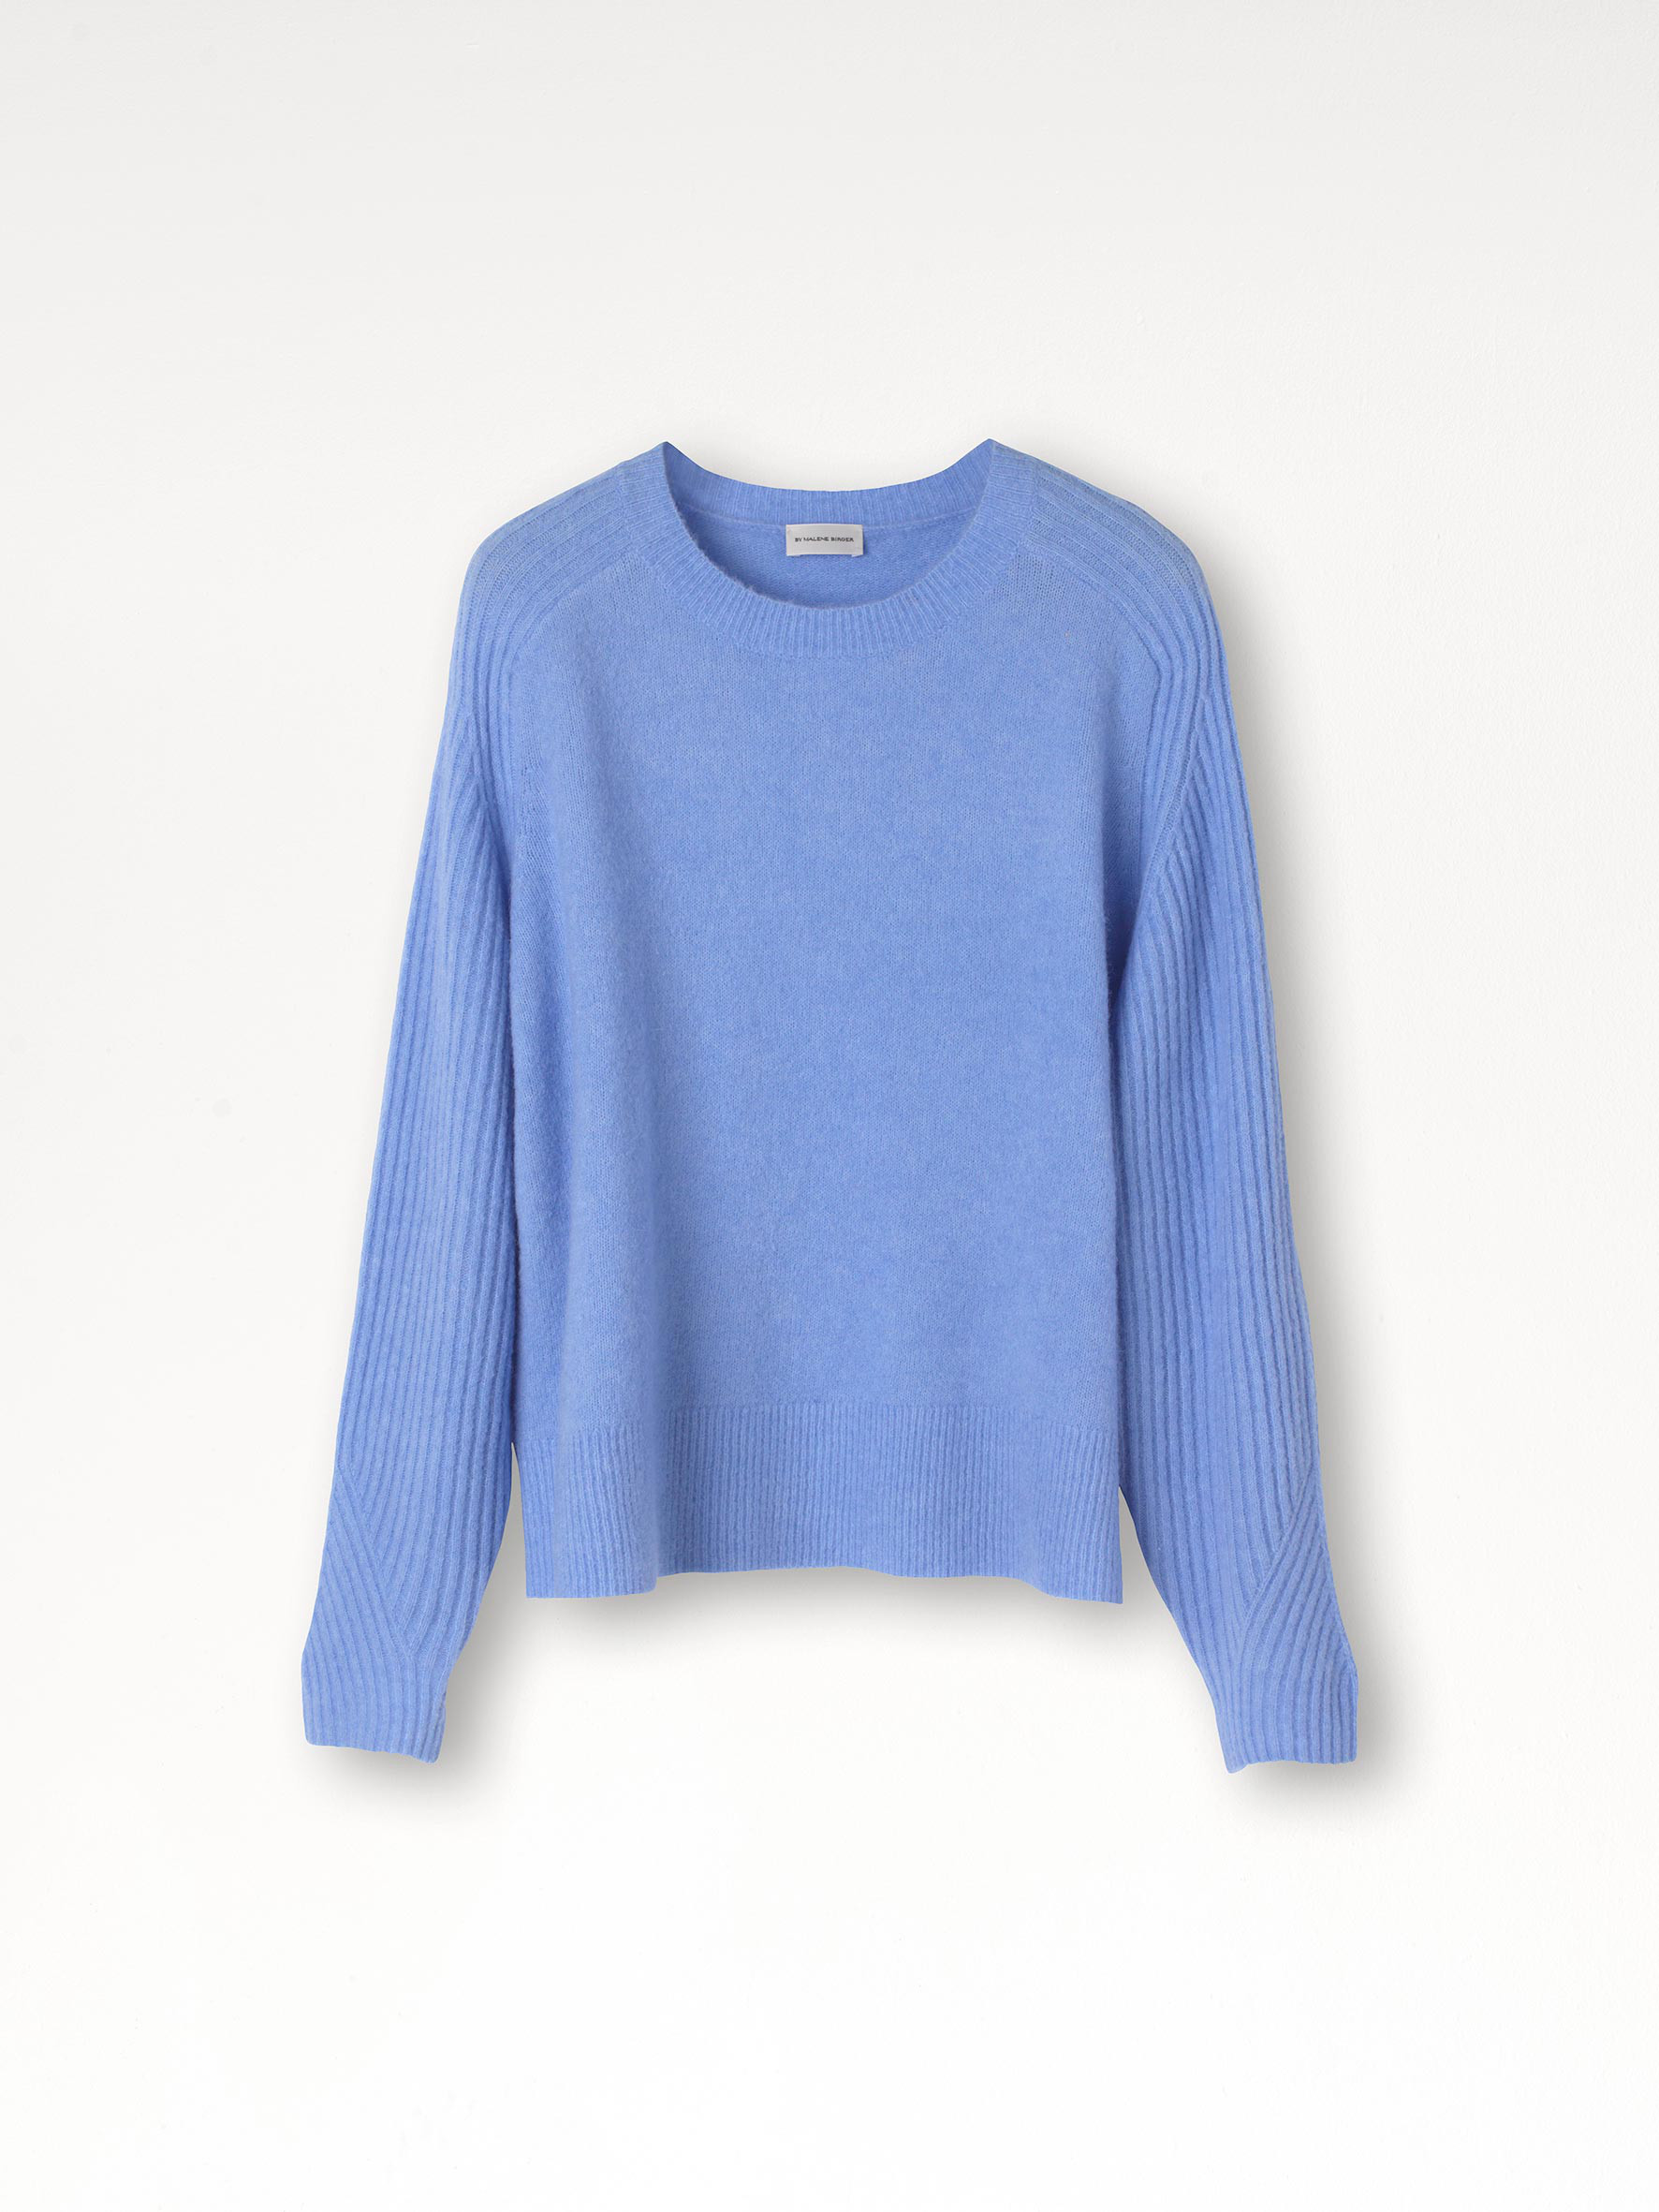 Ana sweater - Buy online